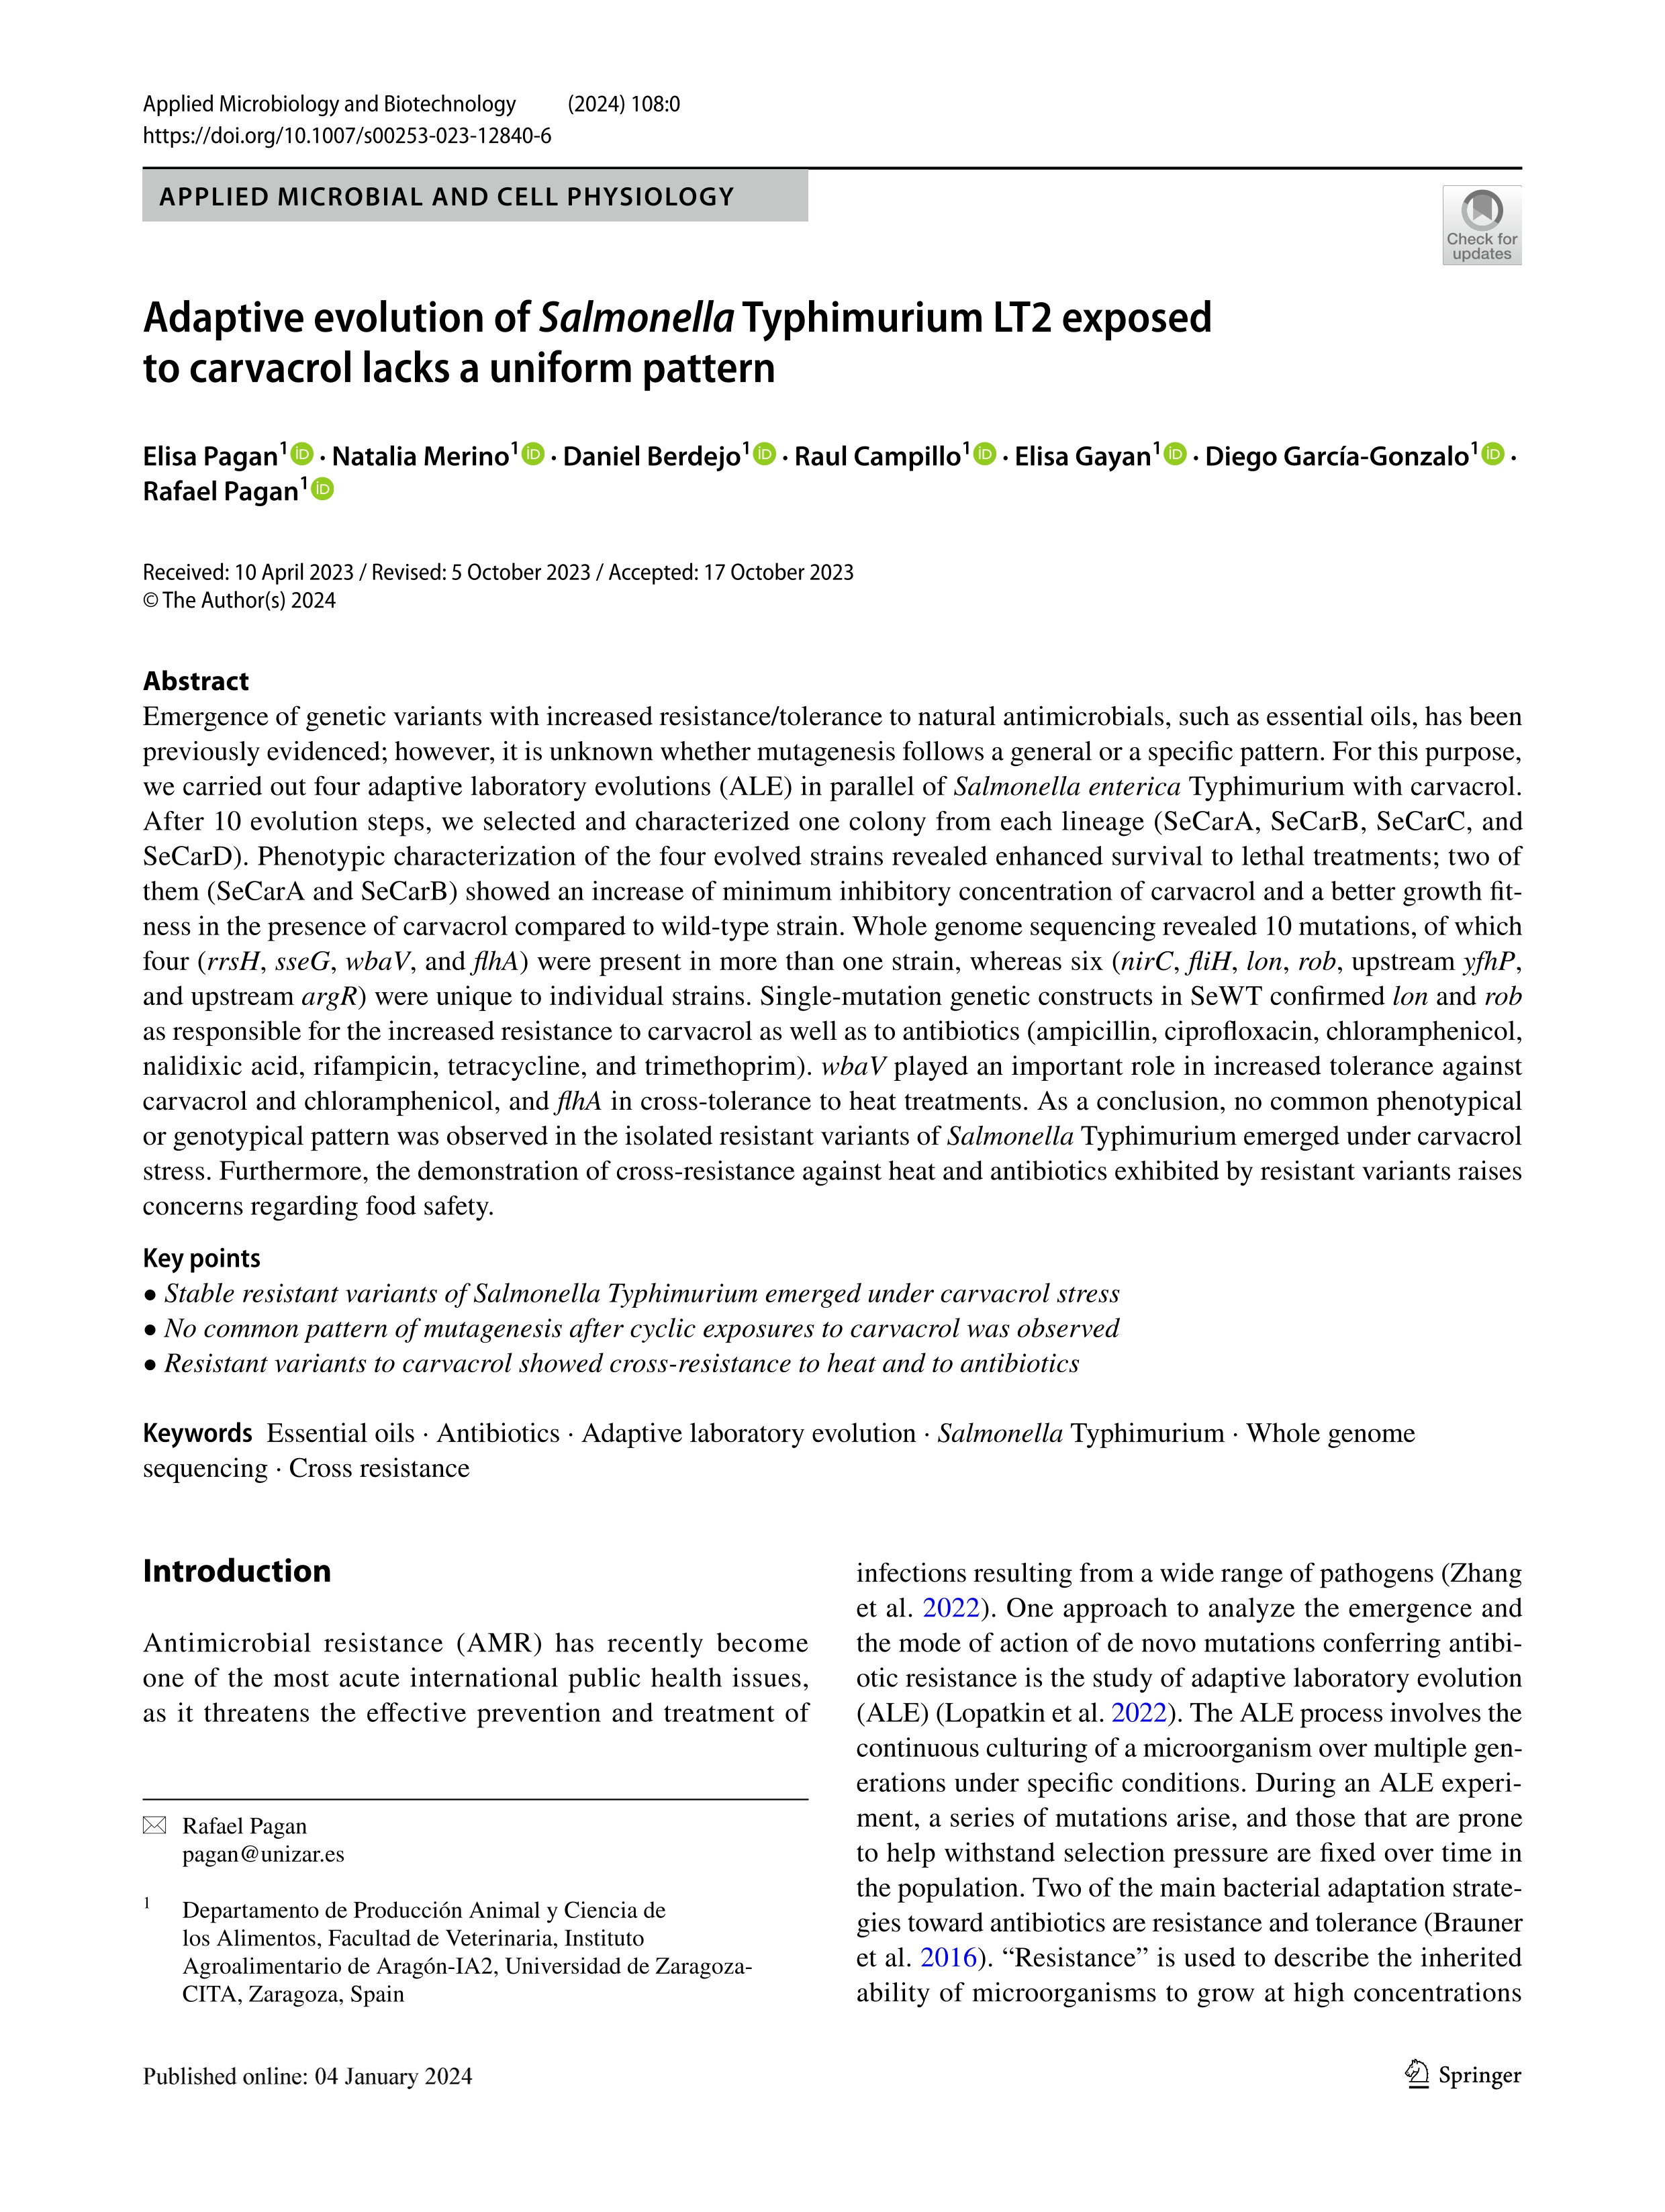 Adaptive evolution of Salmonella Typhimurium LT2 exposed to carvacrol lacks a uniform pattern